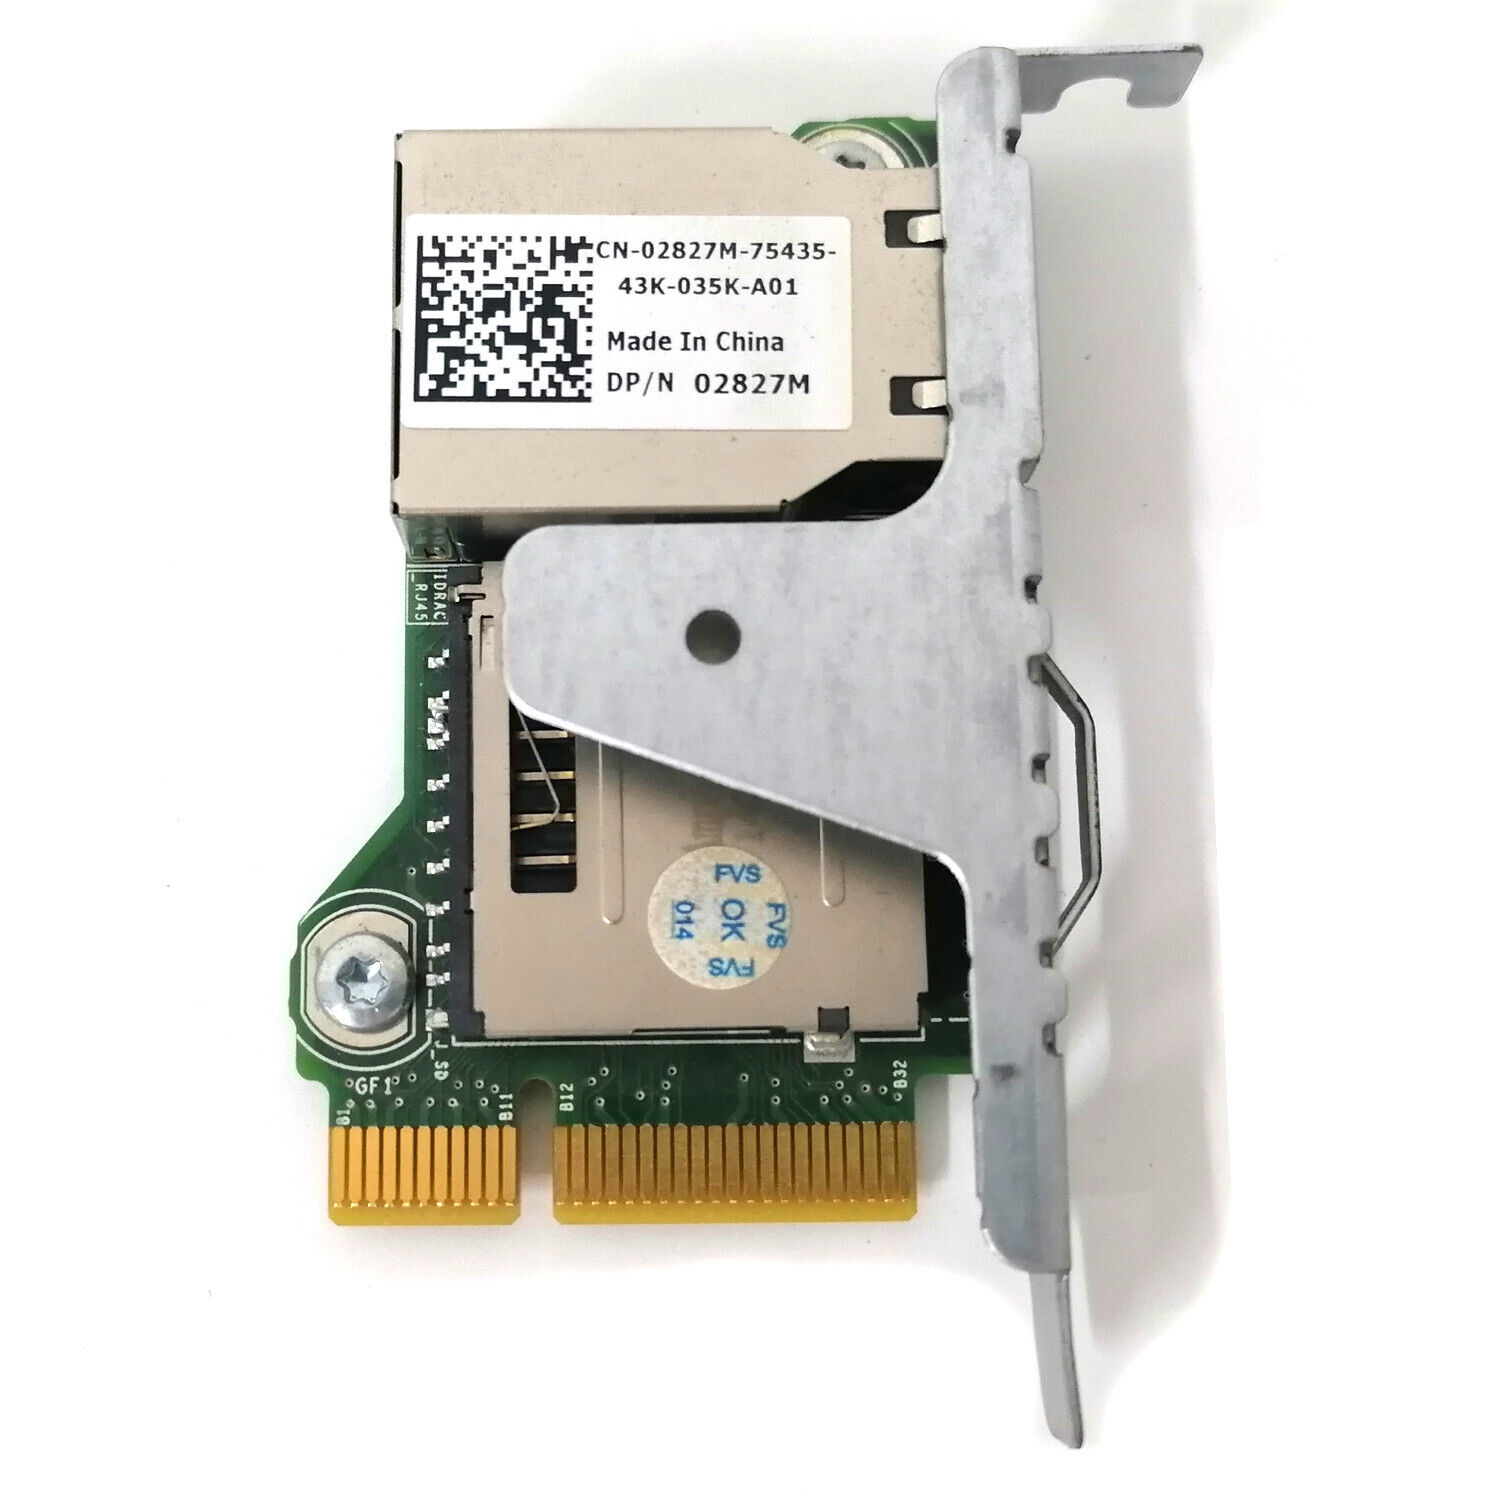 Remote Access Card iDRAC7 Express For Dell R320 R420 R520 T320 T420 T520 2827M